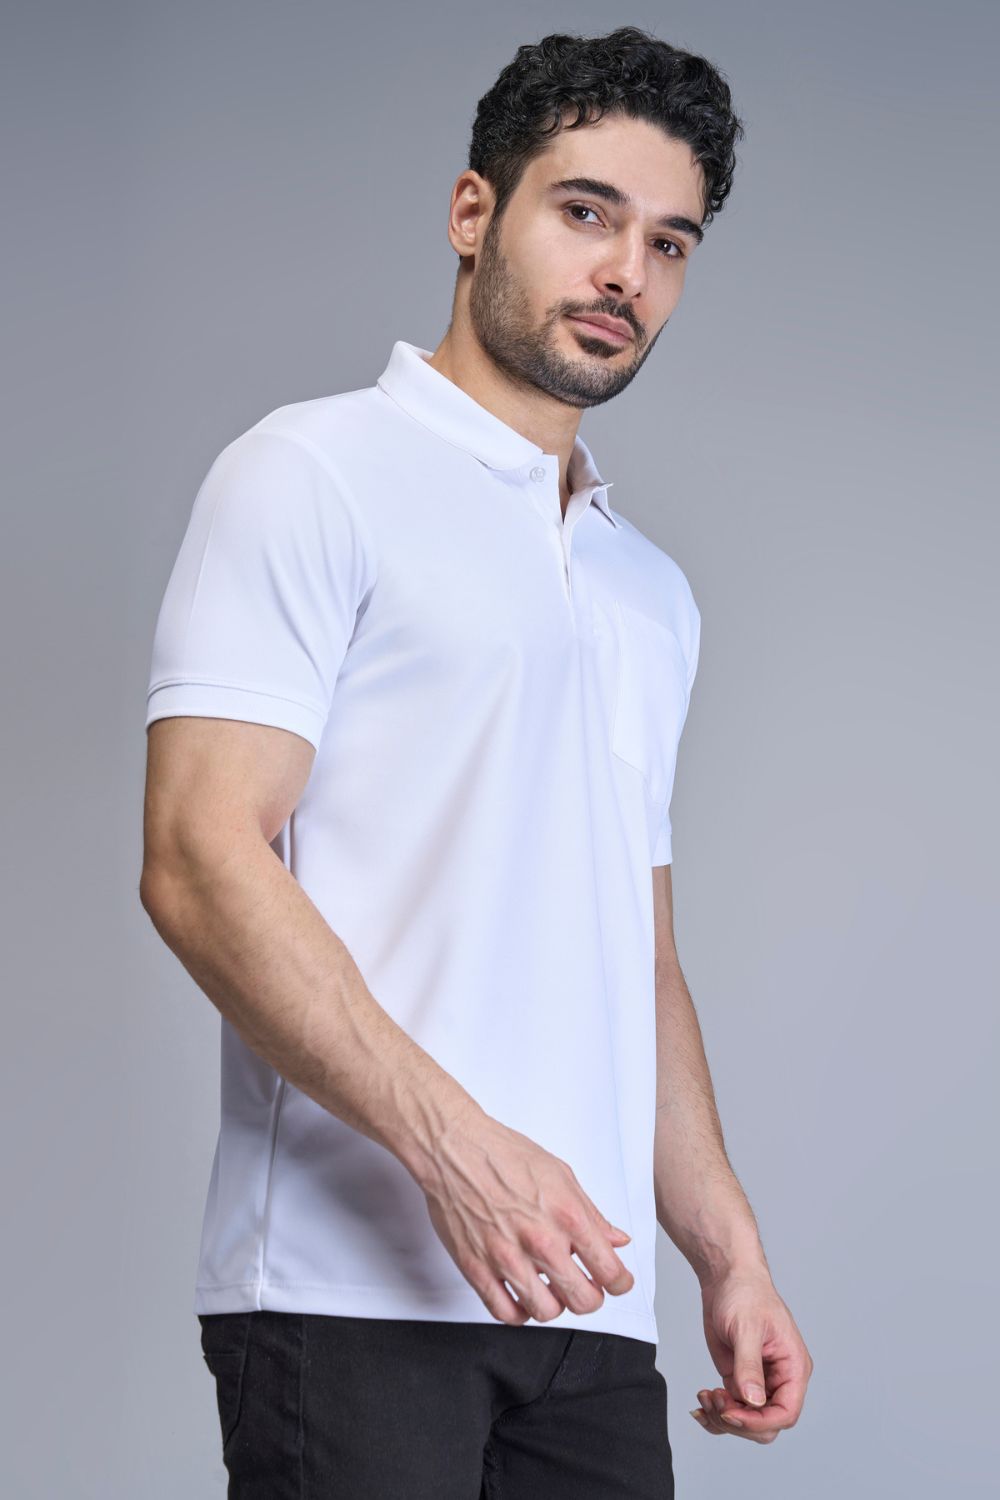 White Smart Tech Pocket + Polo T-shirts Maxzone Clothing   